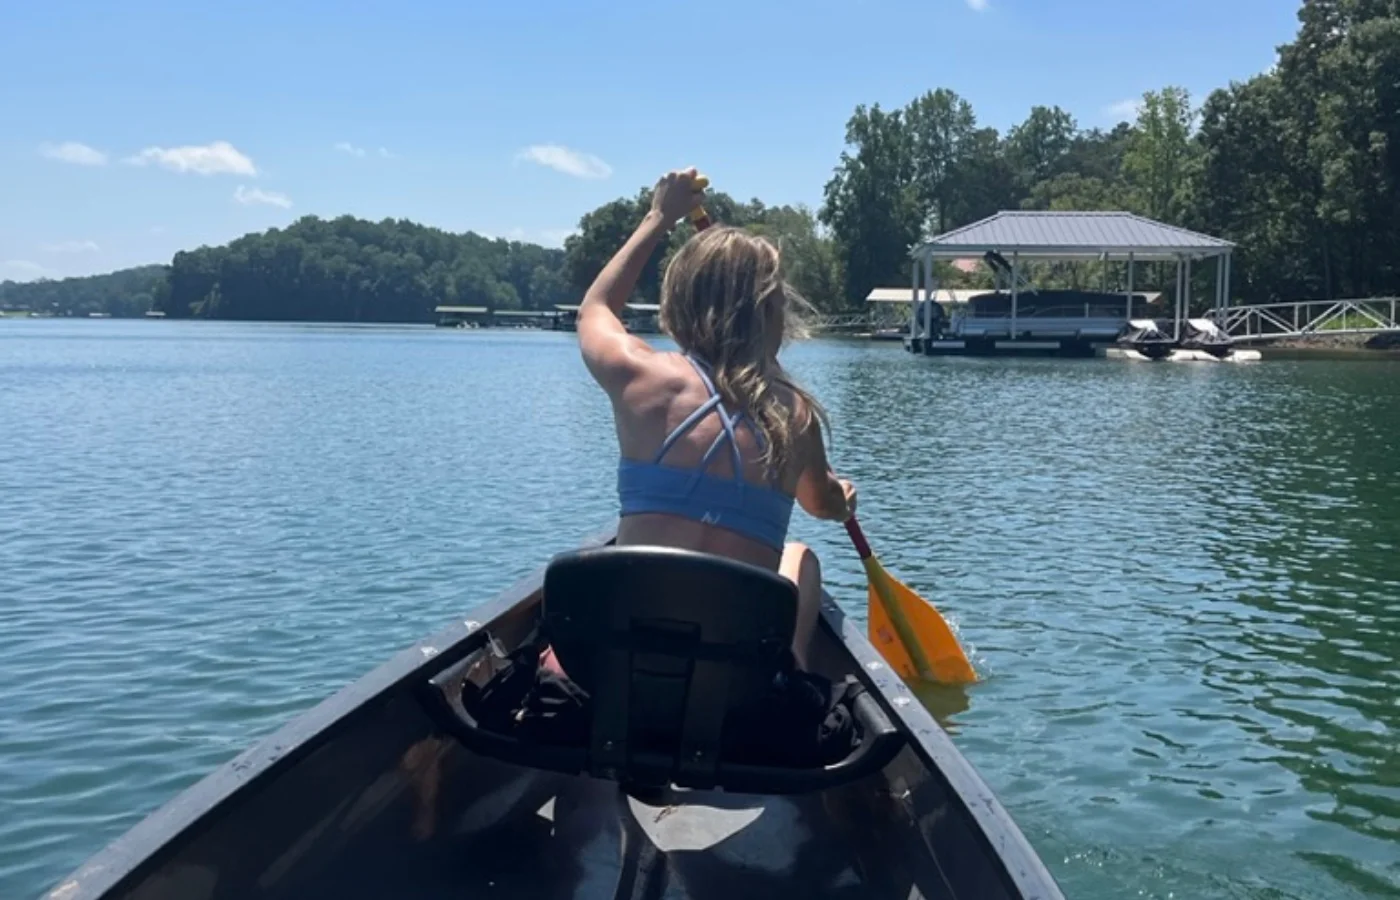 A woman paddles a canoe on a lake.